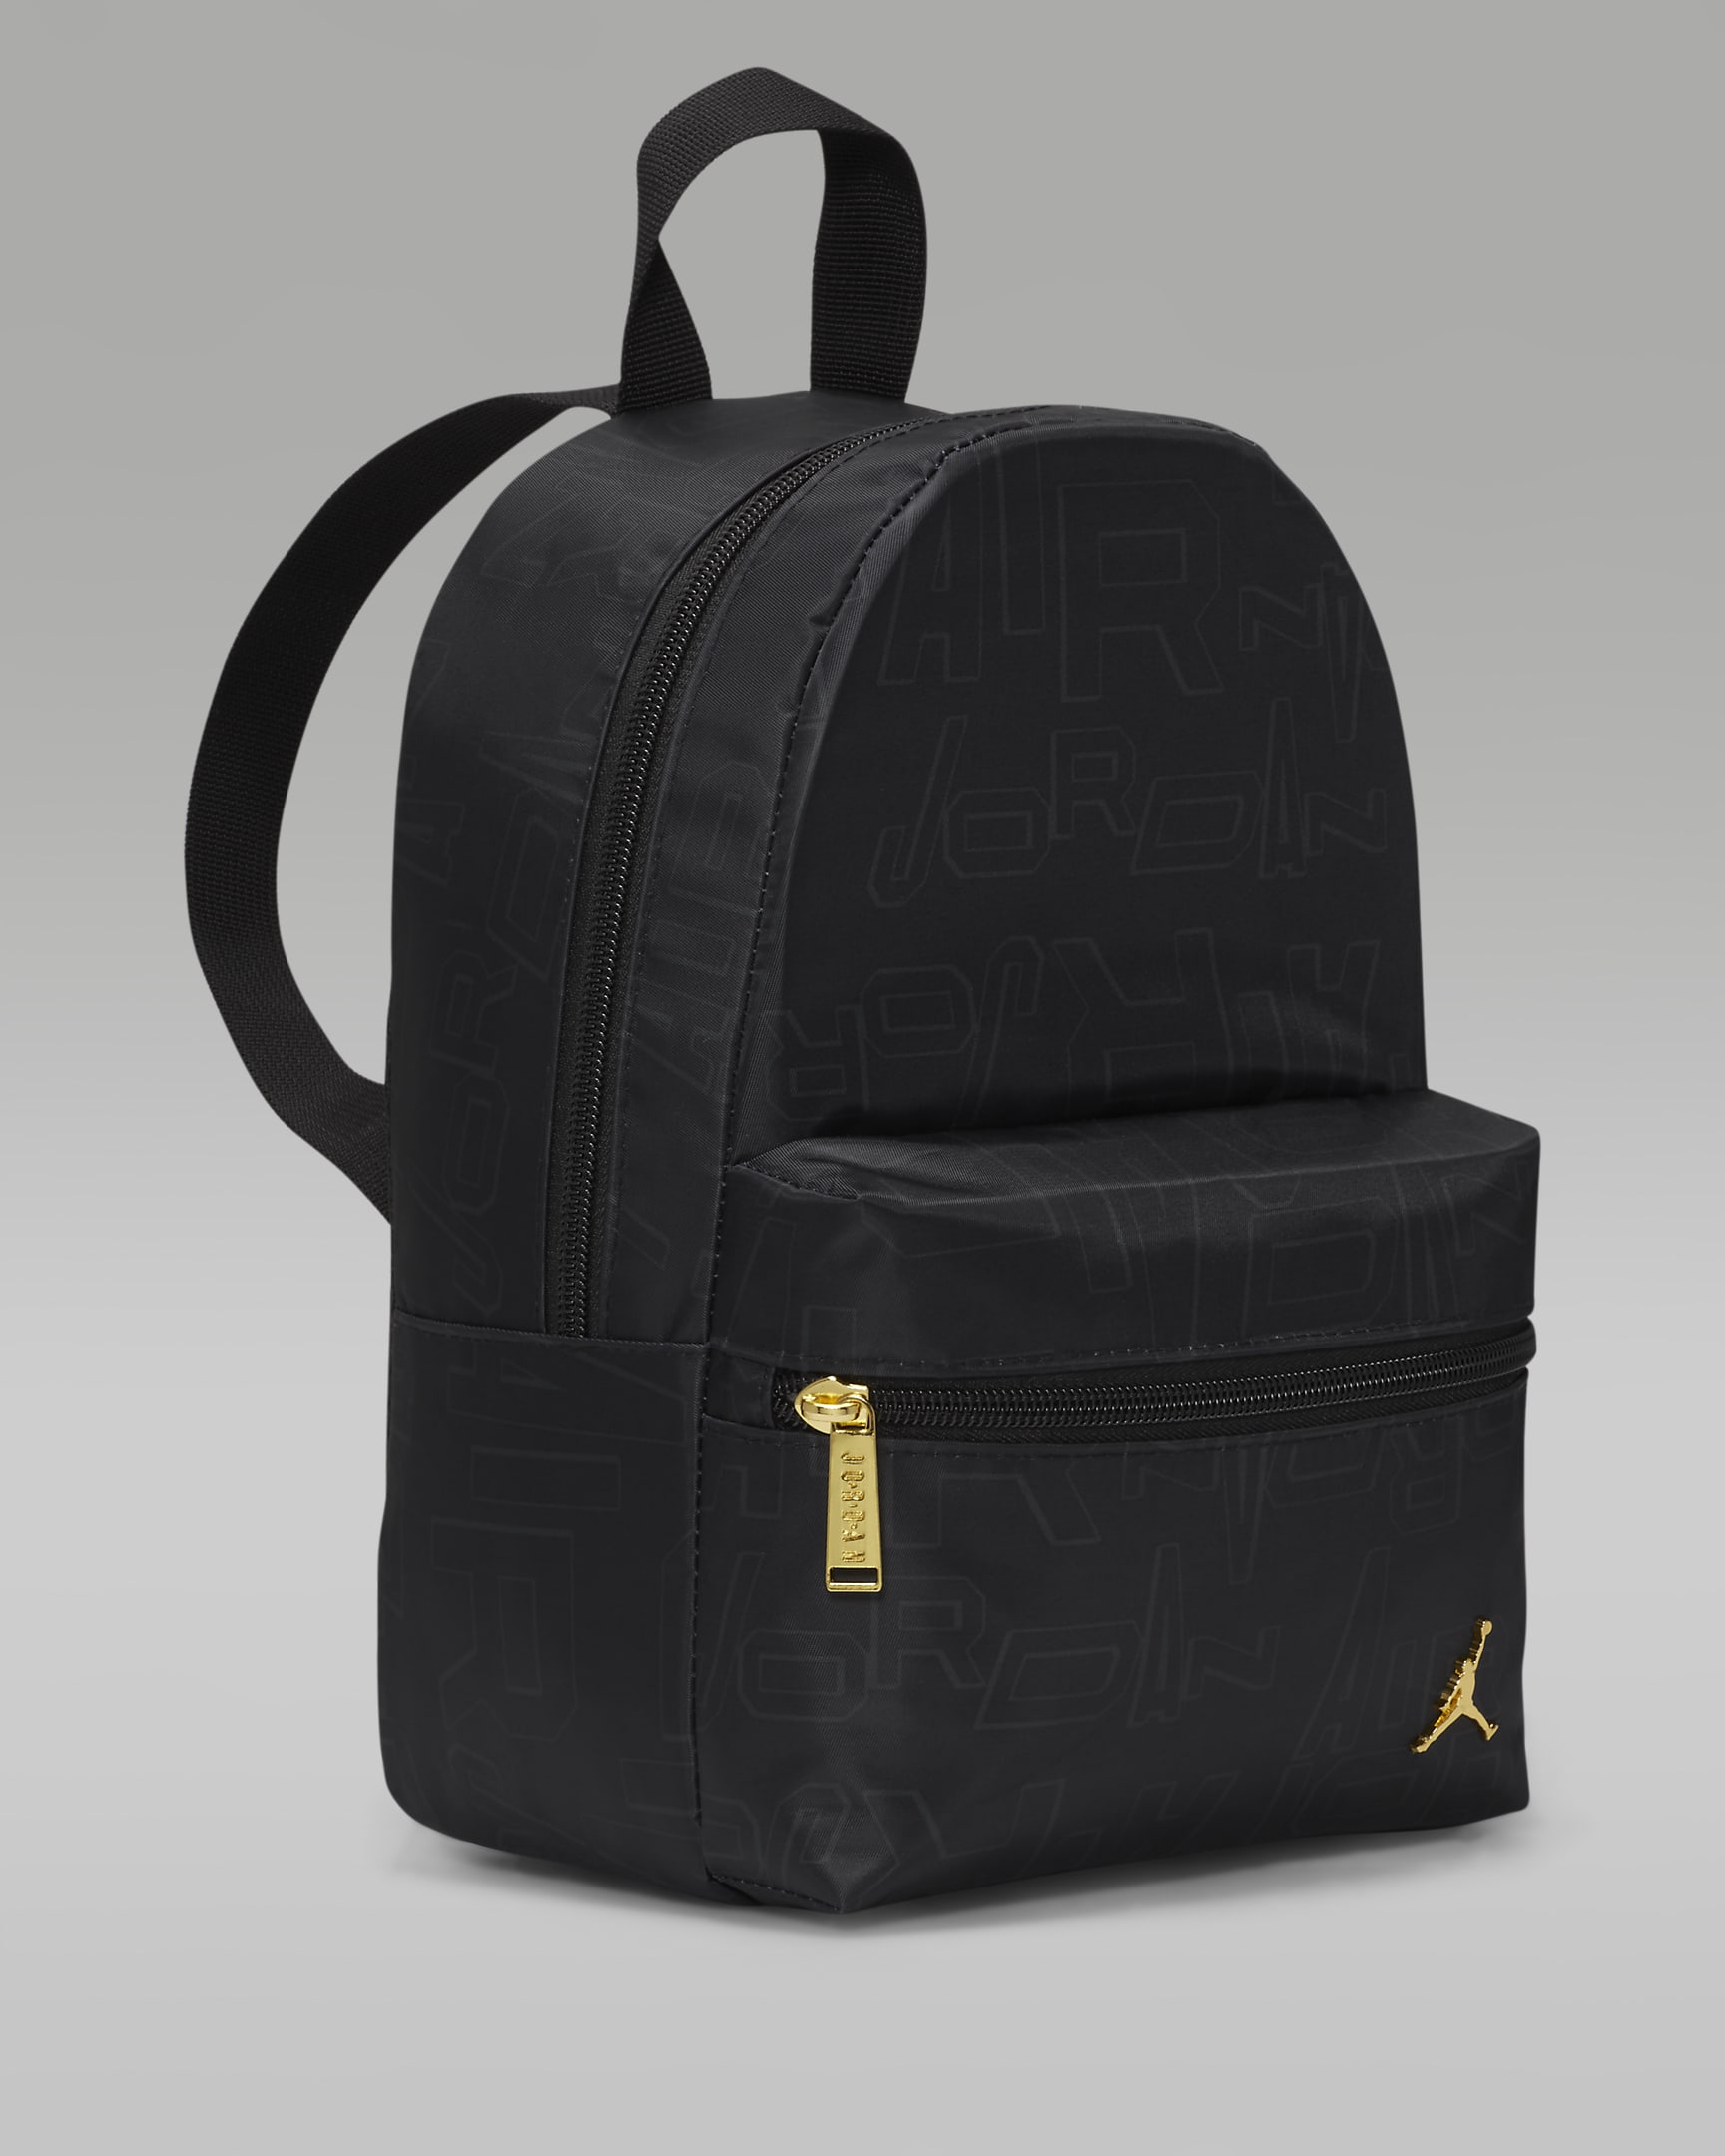 Jordan Black and Gold Mini Backpack Backpack (10L). Nike UK